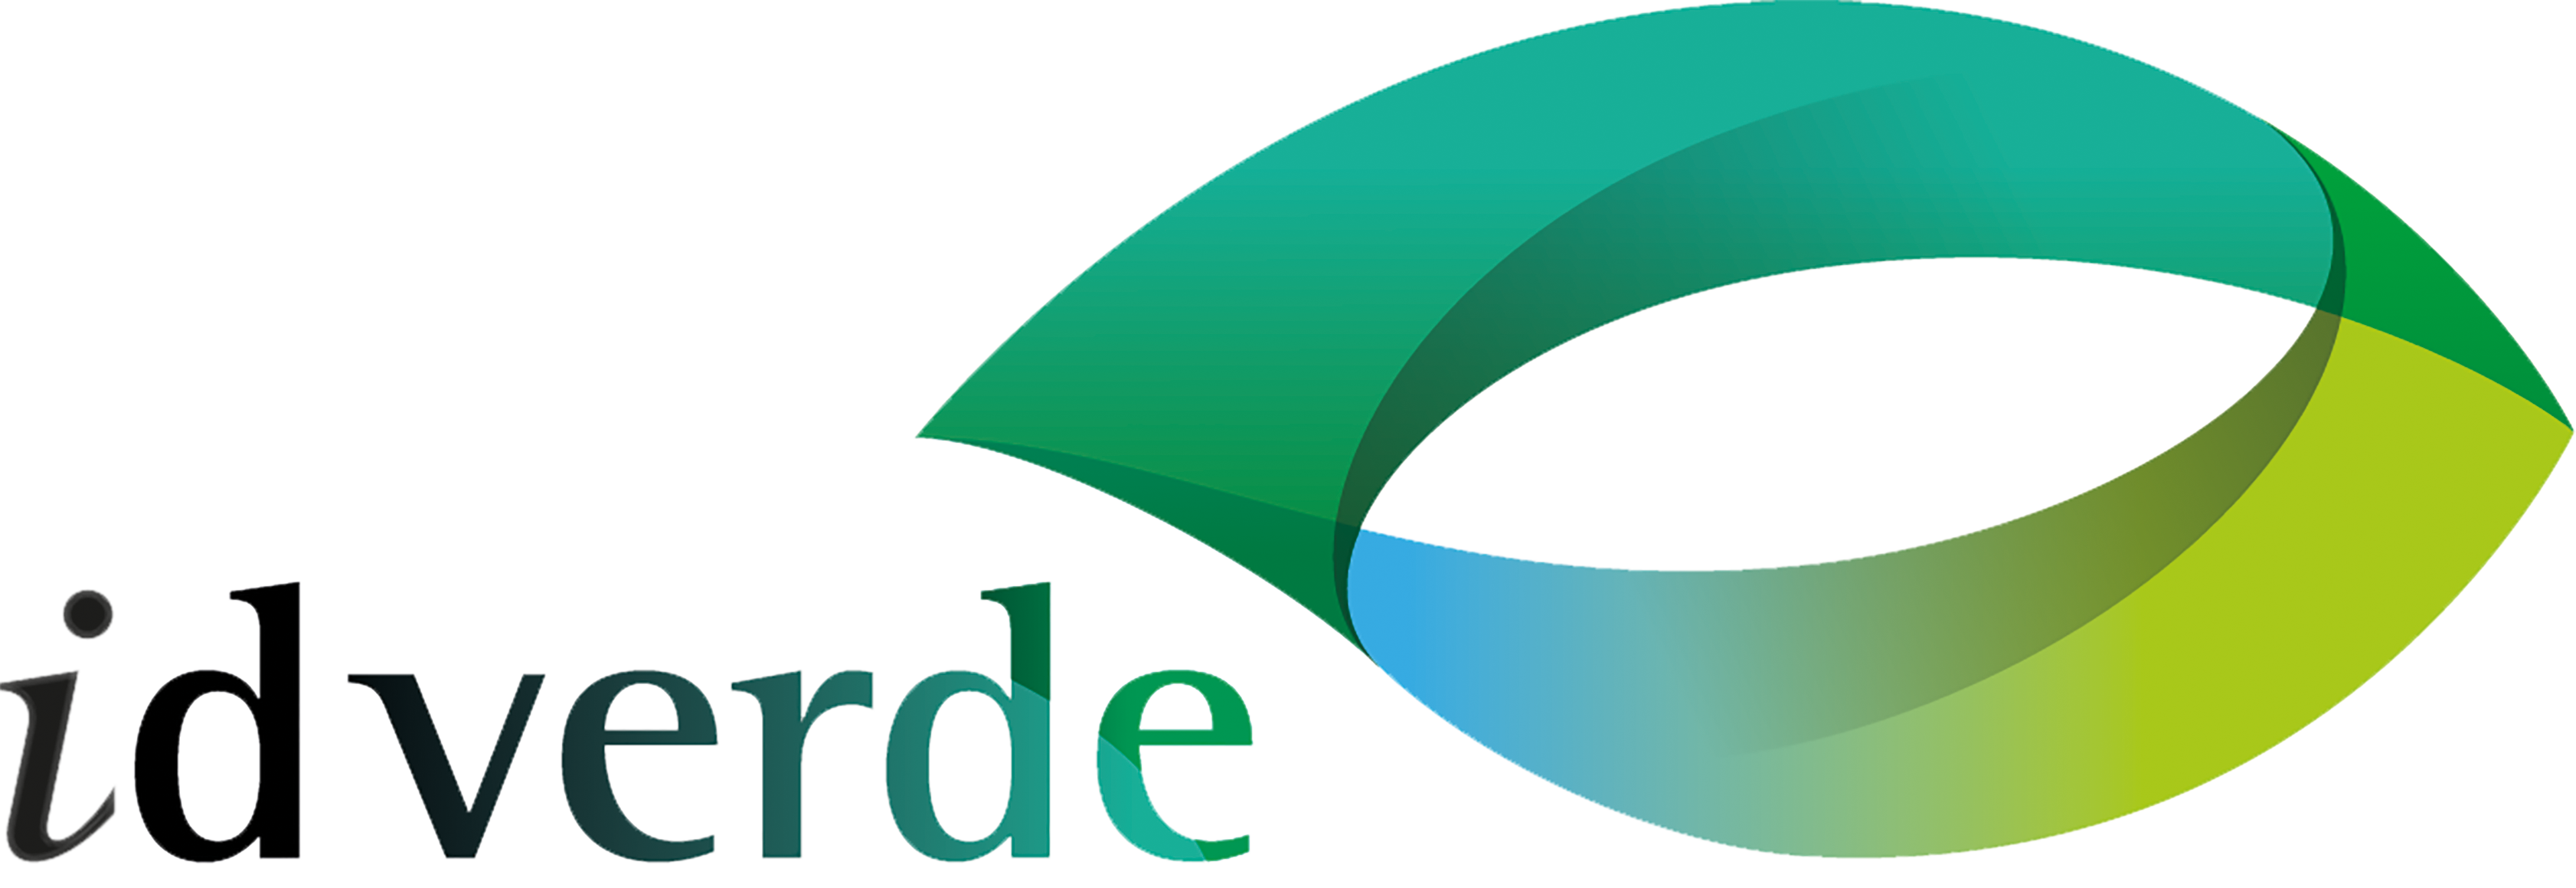 idverde-Logo-no-background